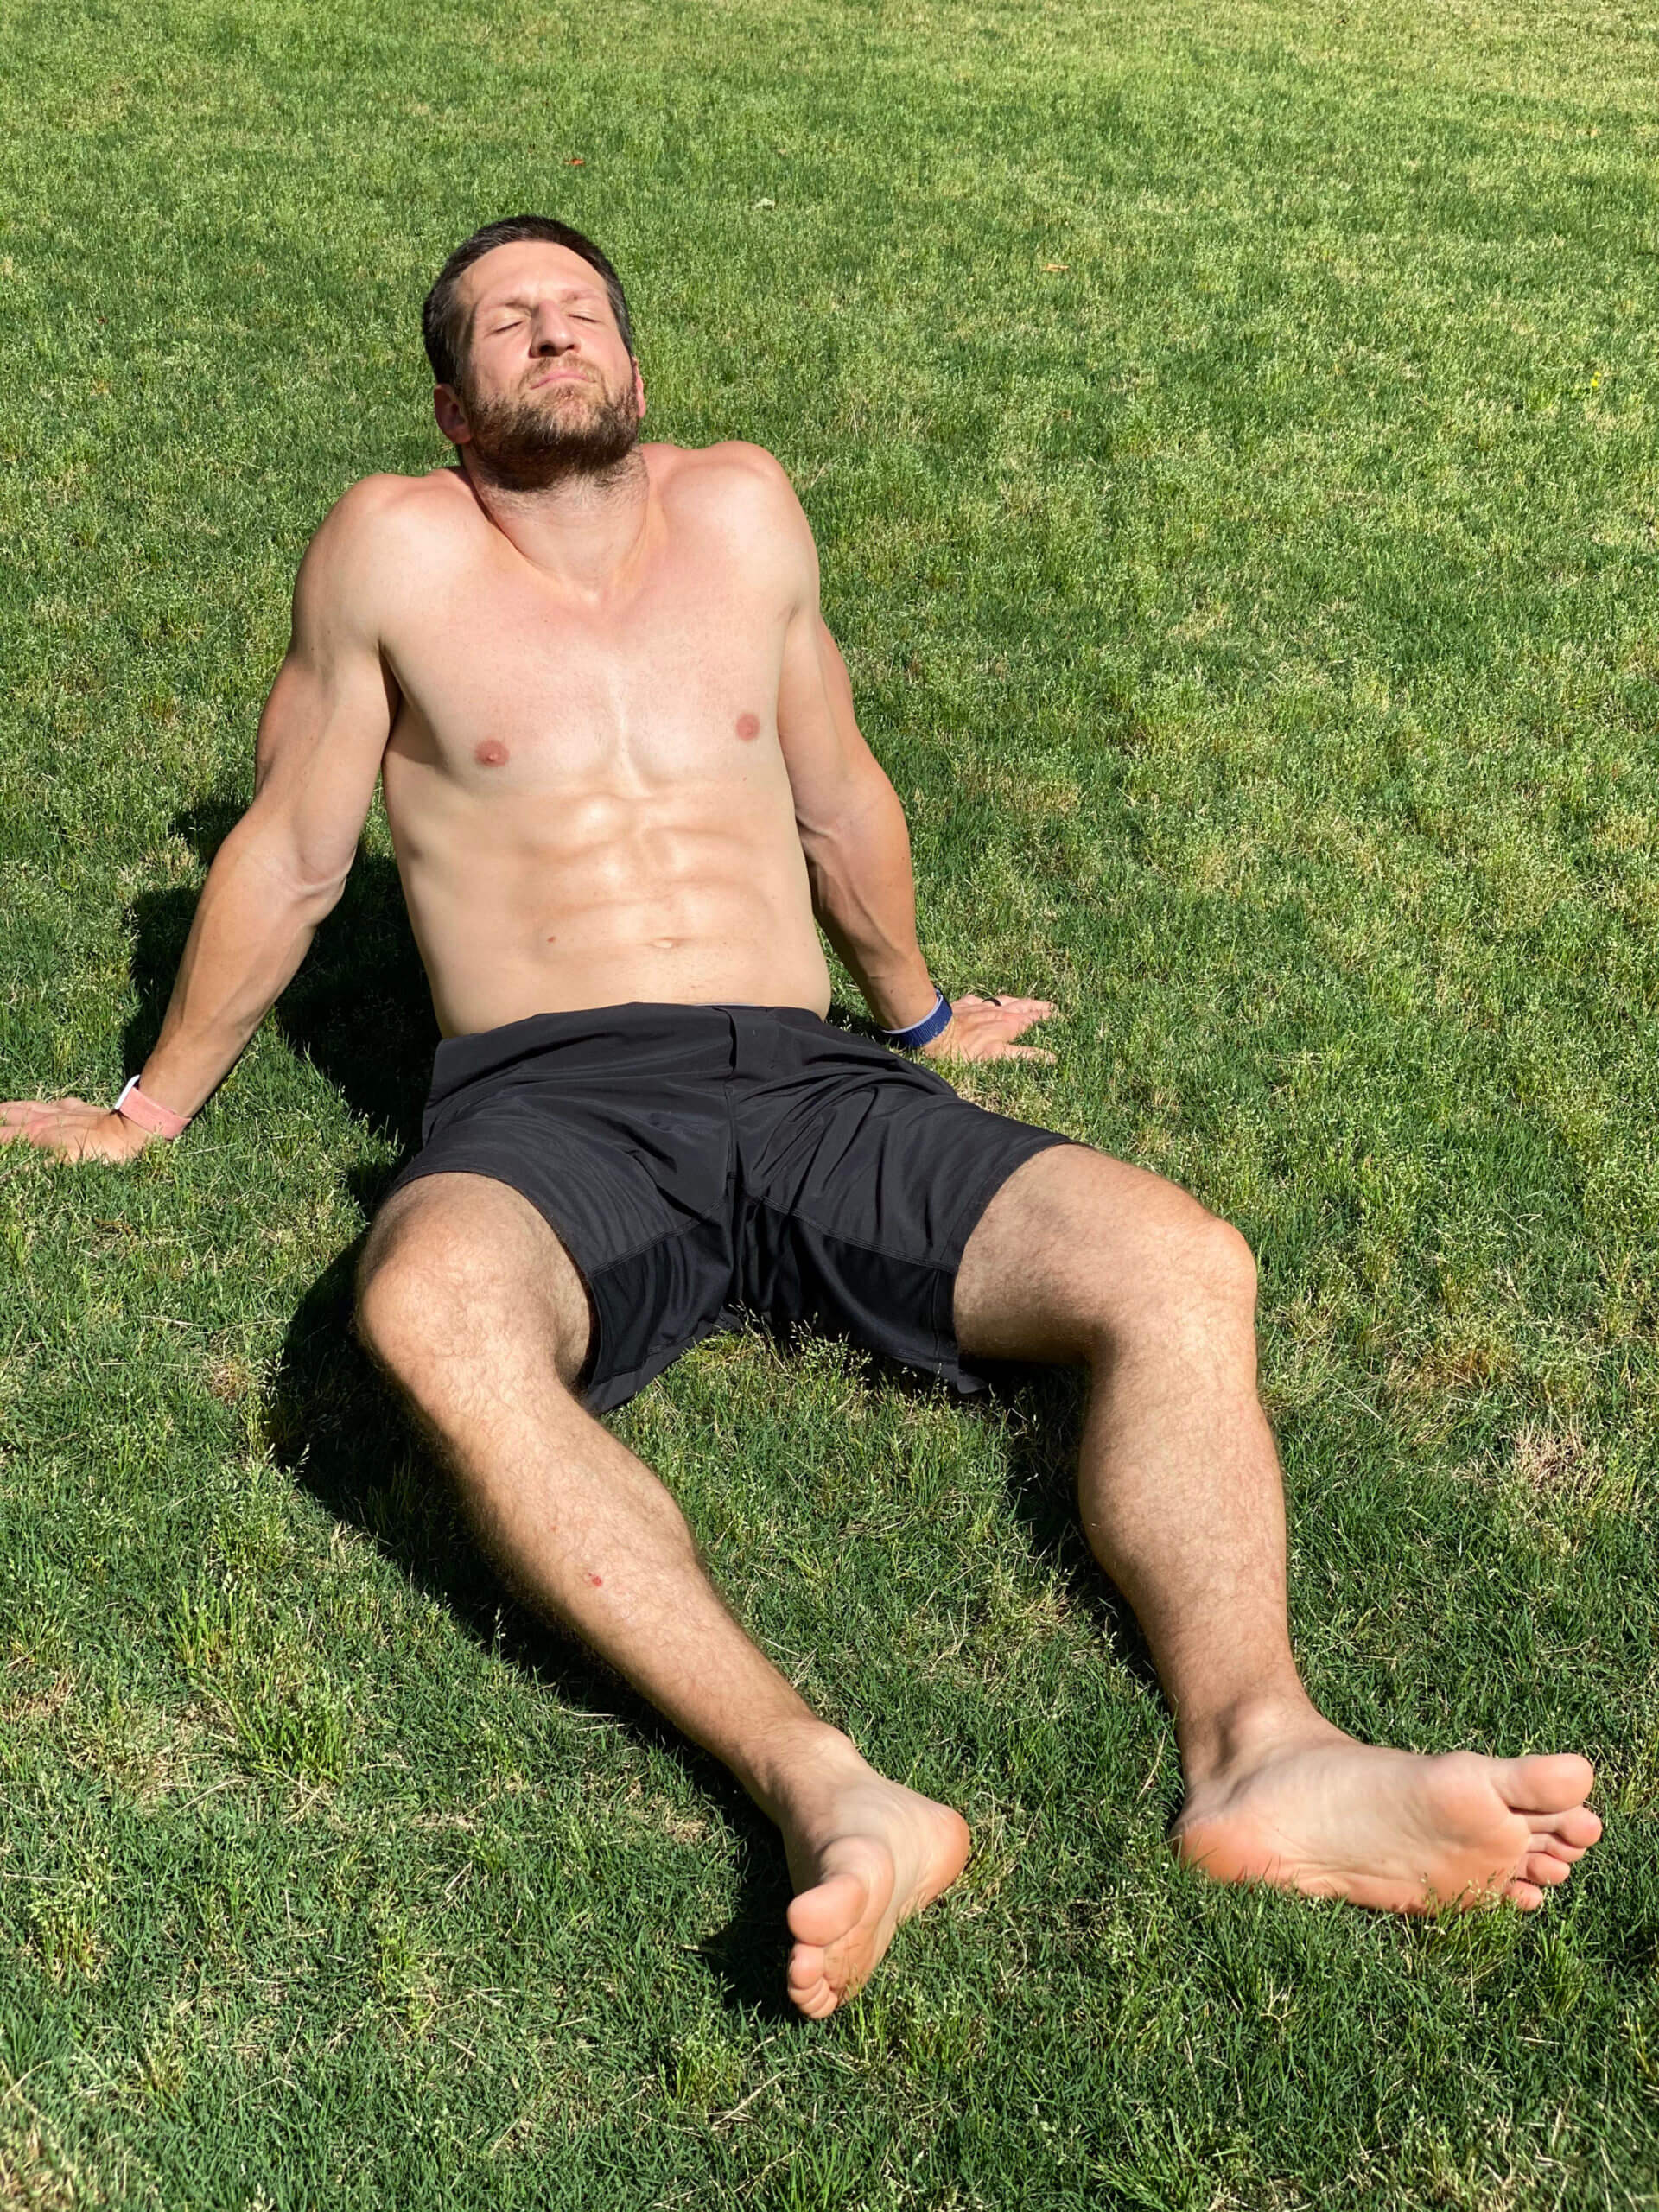 A photo of Michael Kummer sunning shirtless in the backyard.